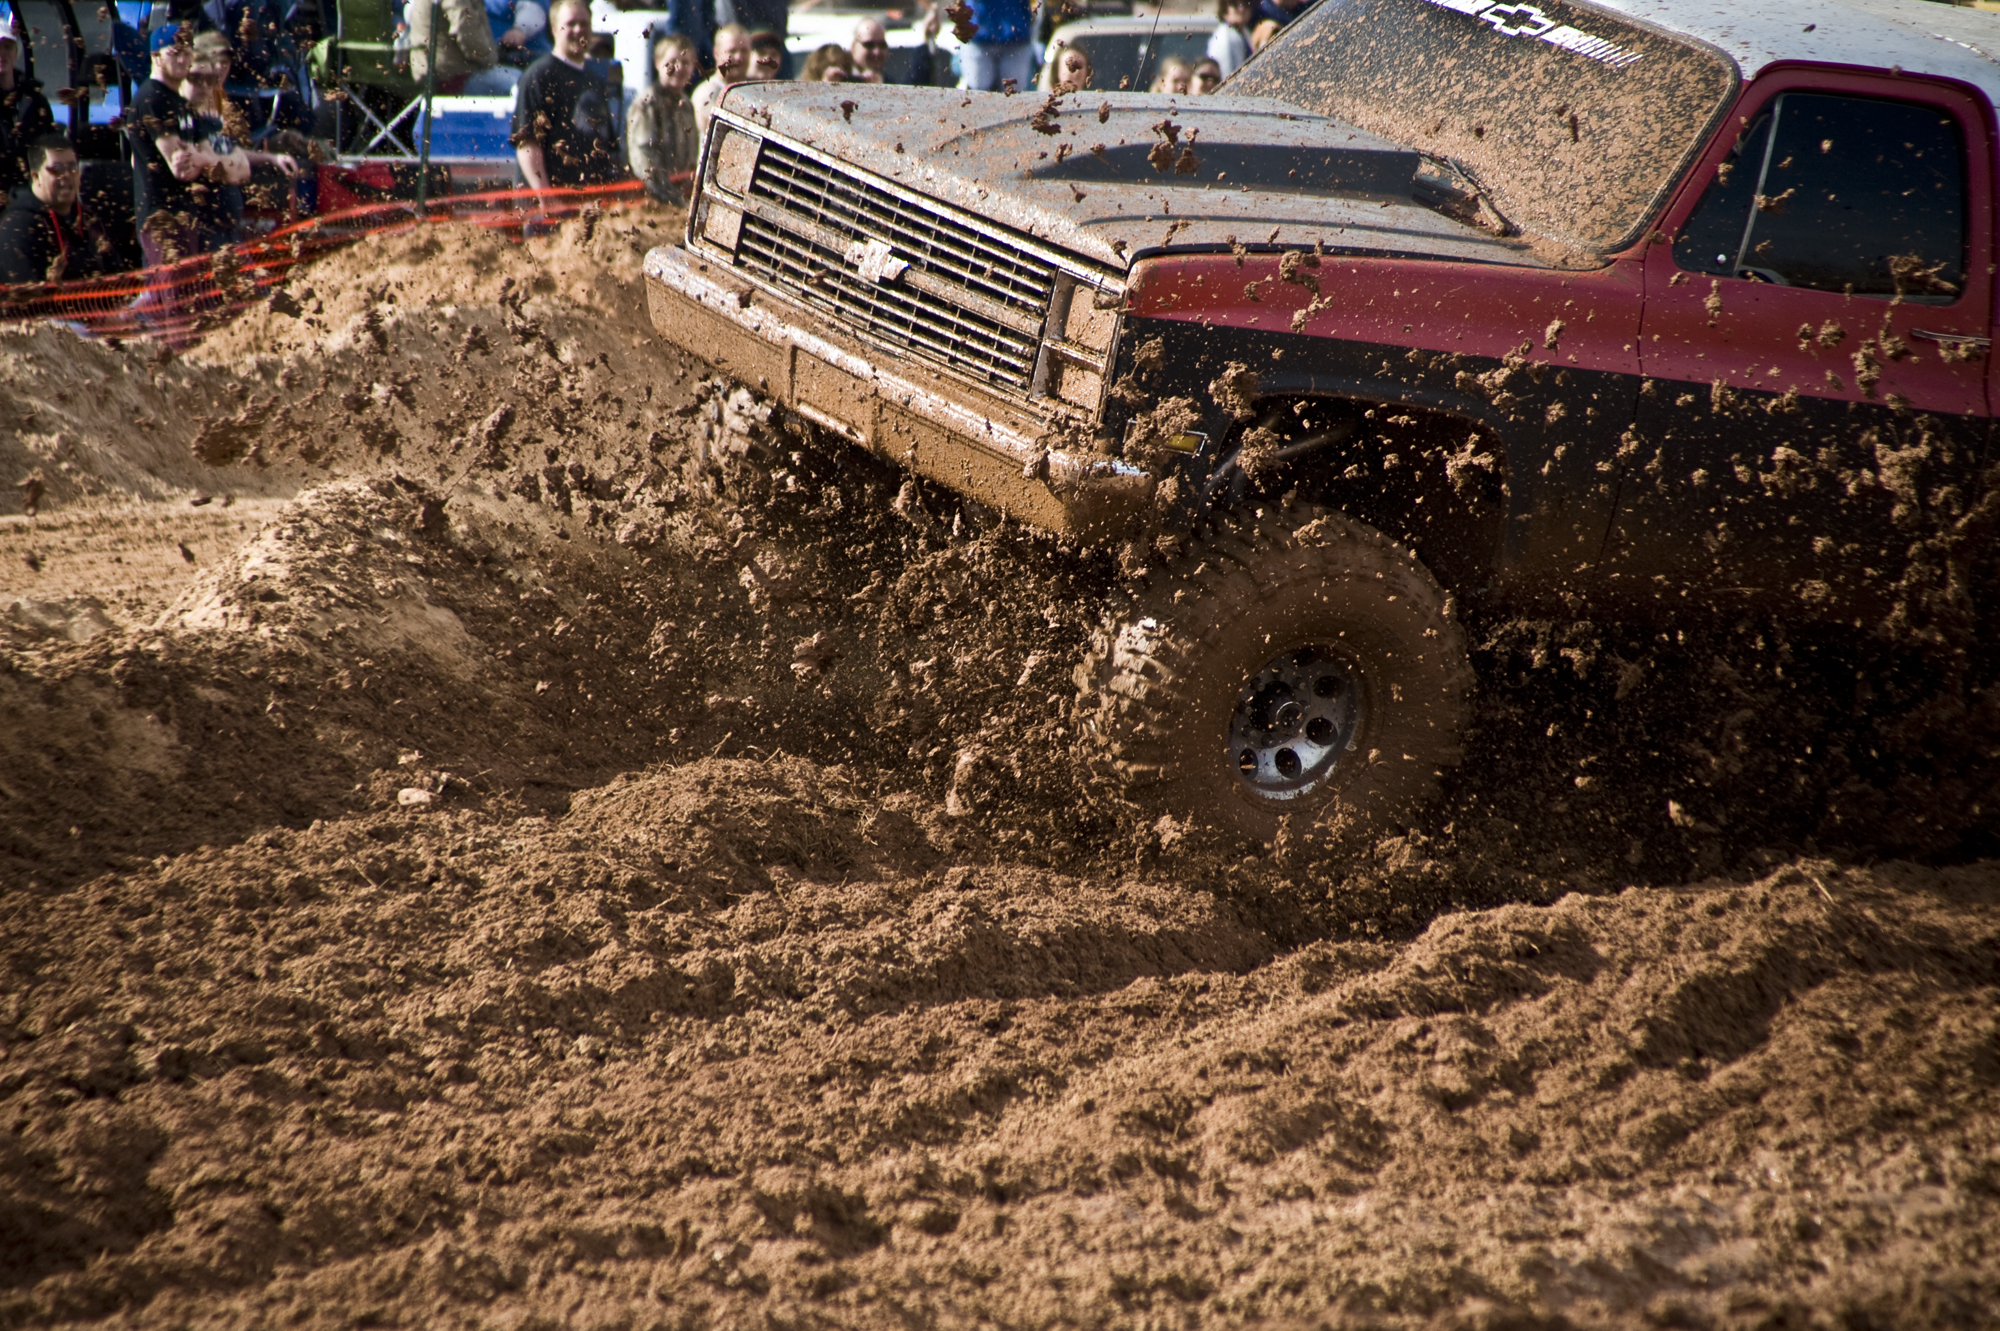 Mud Bogging Offroad Race Racing Monster Truck Pickup